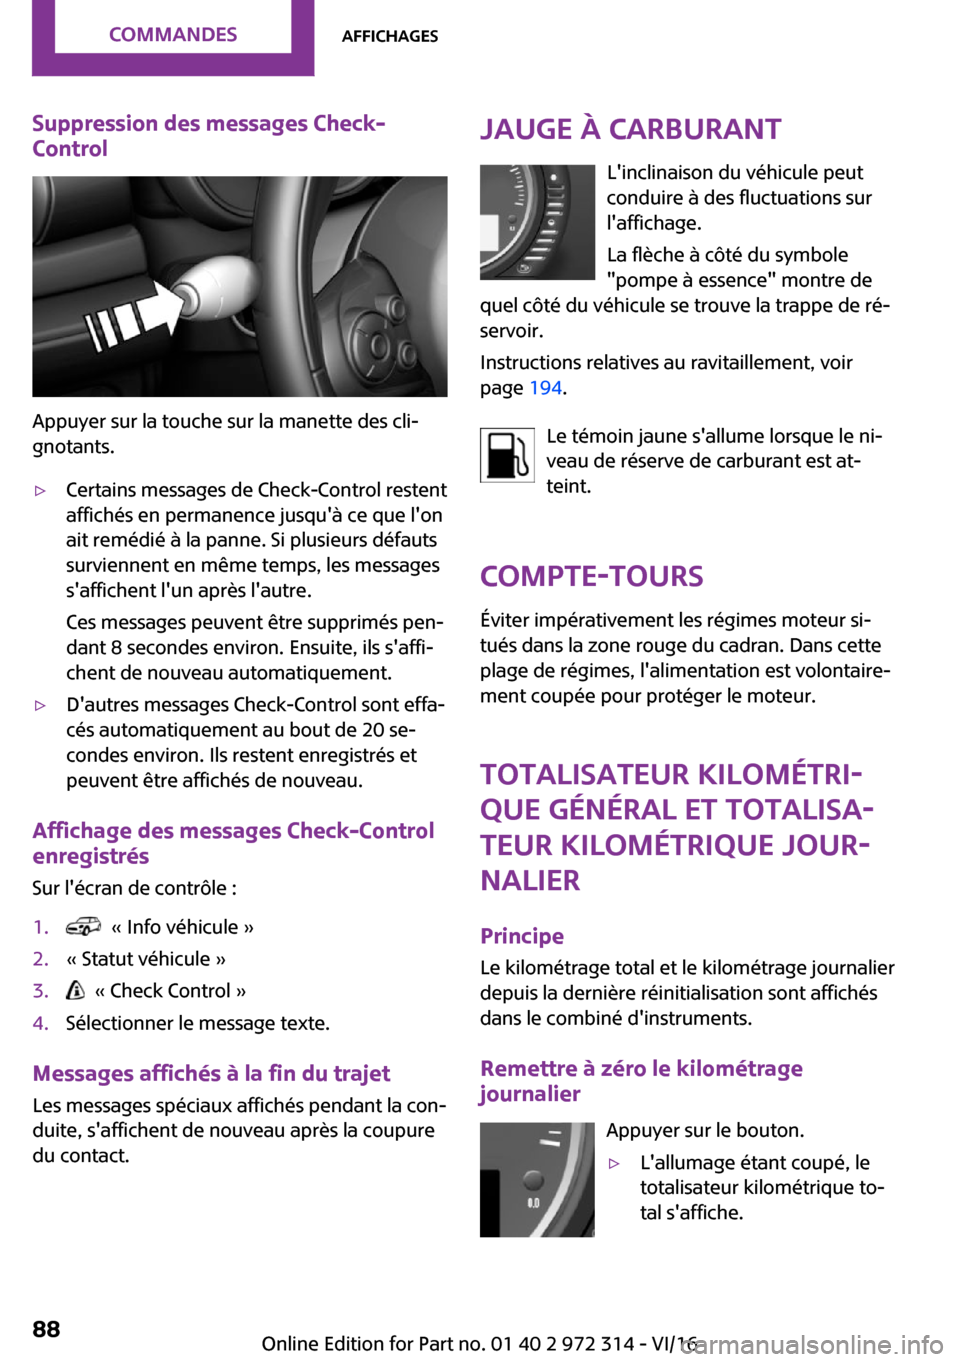 MINI 5 door 2016  Manuel du propriétaire (in French) �S�u�p�p�r�e�s�s�i�o�n��d�e�s��m�e�s�s�a�g�e�s��C�h�e�c�k�-
�C�o�n�t�r�o�l
�A�p�p�u�y�e�r� �s�u�r� �l�a� �t�o�u�c�h�e� �s�u�r� �l�a� �m�a�n�e�t�t�e� �d�e�s� �c�l�i~ �g�n�o�t�a�n�t�s�.
